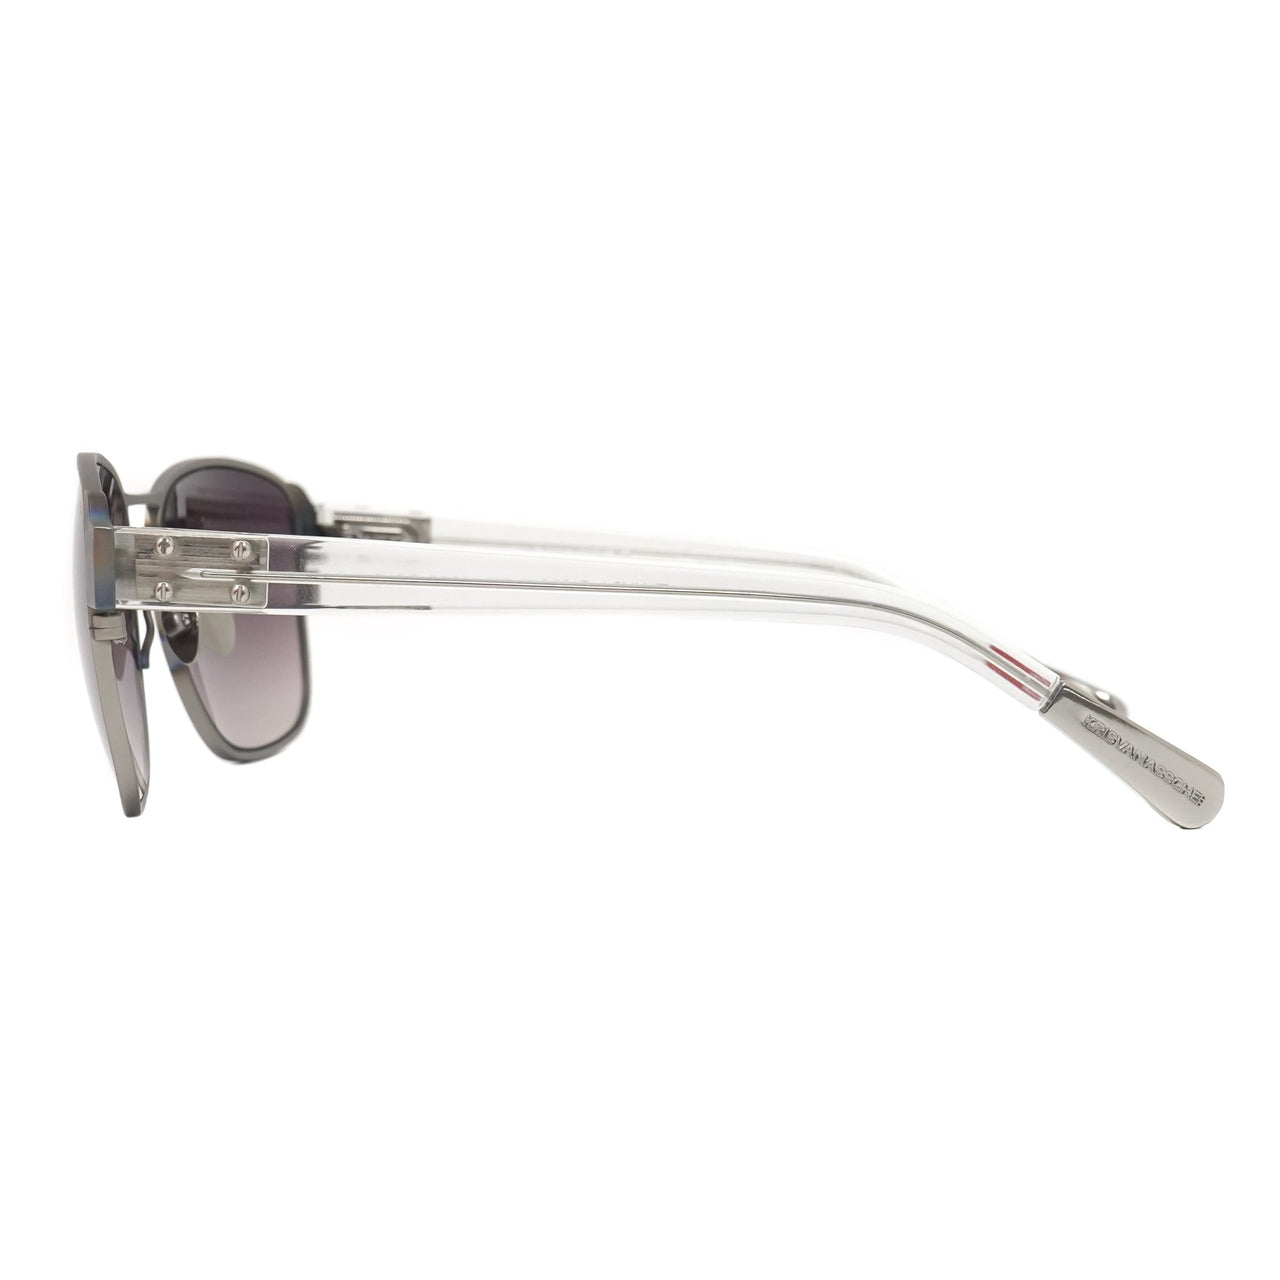 Kris Van Assche Sunglasses D-Frame Iridescent Silver and Purple - Watches & Crystals